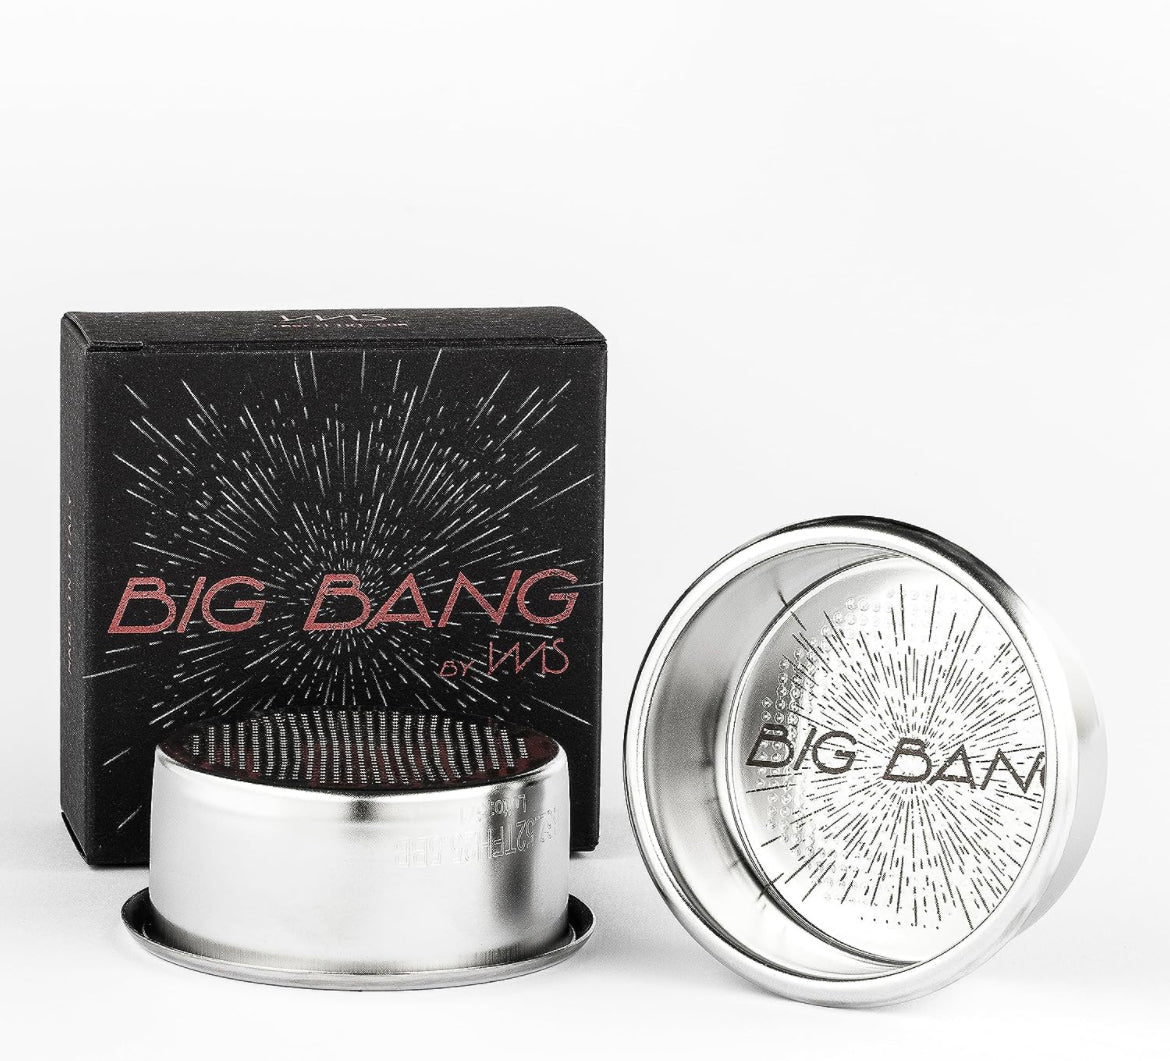 IMS Big Bang Präzisions-Filterkorb für 58 mm Siebträger 27.5 mm hoch - Coffee Coaching Club